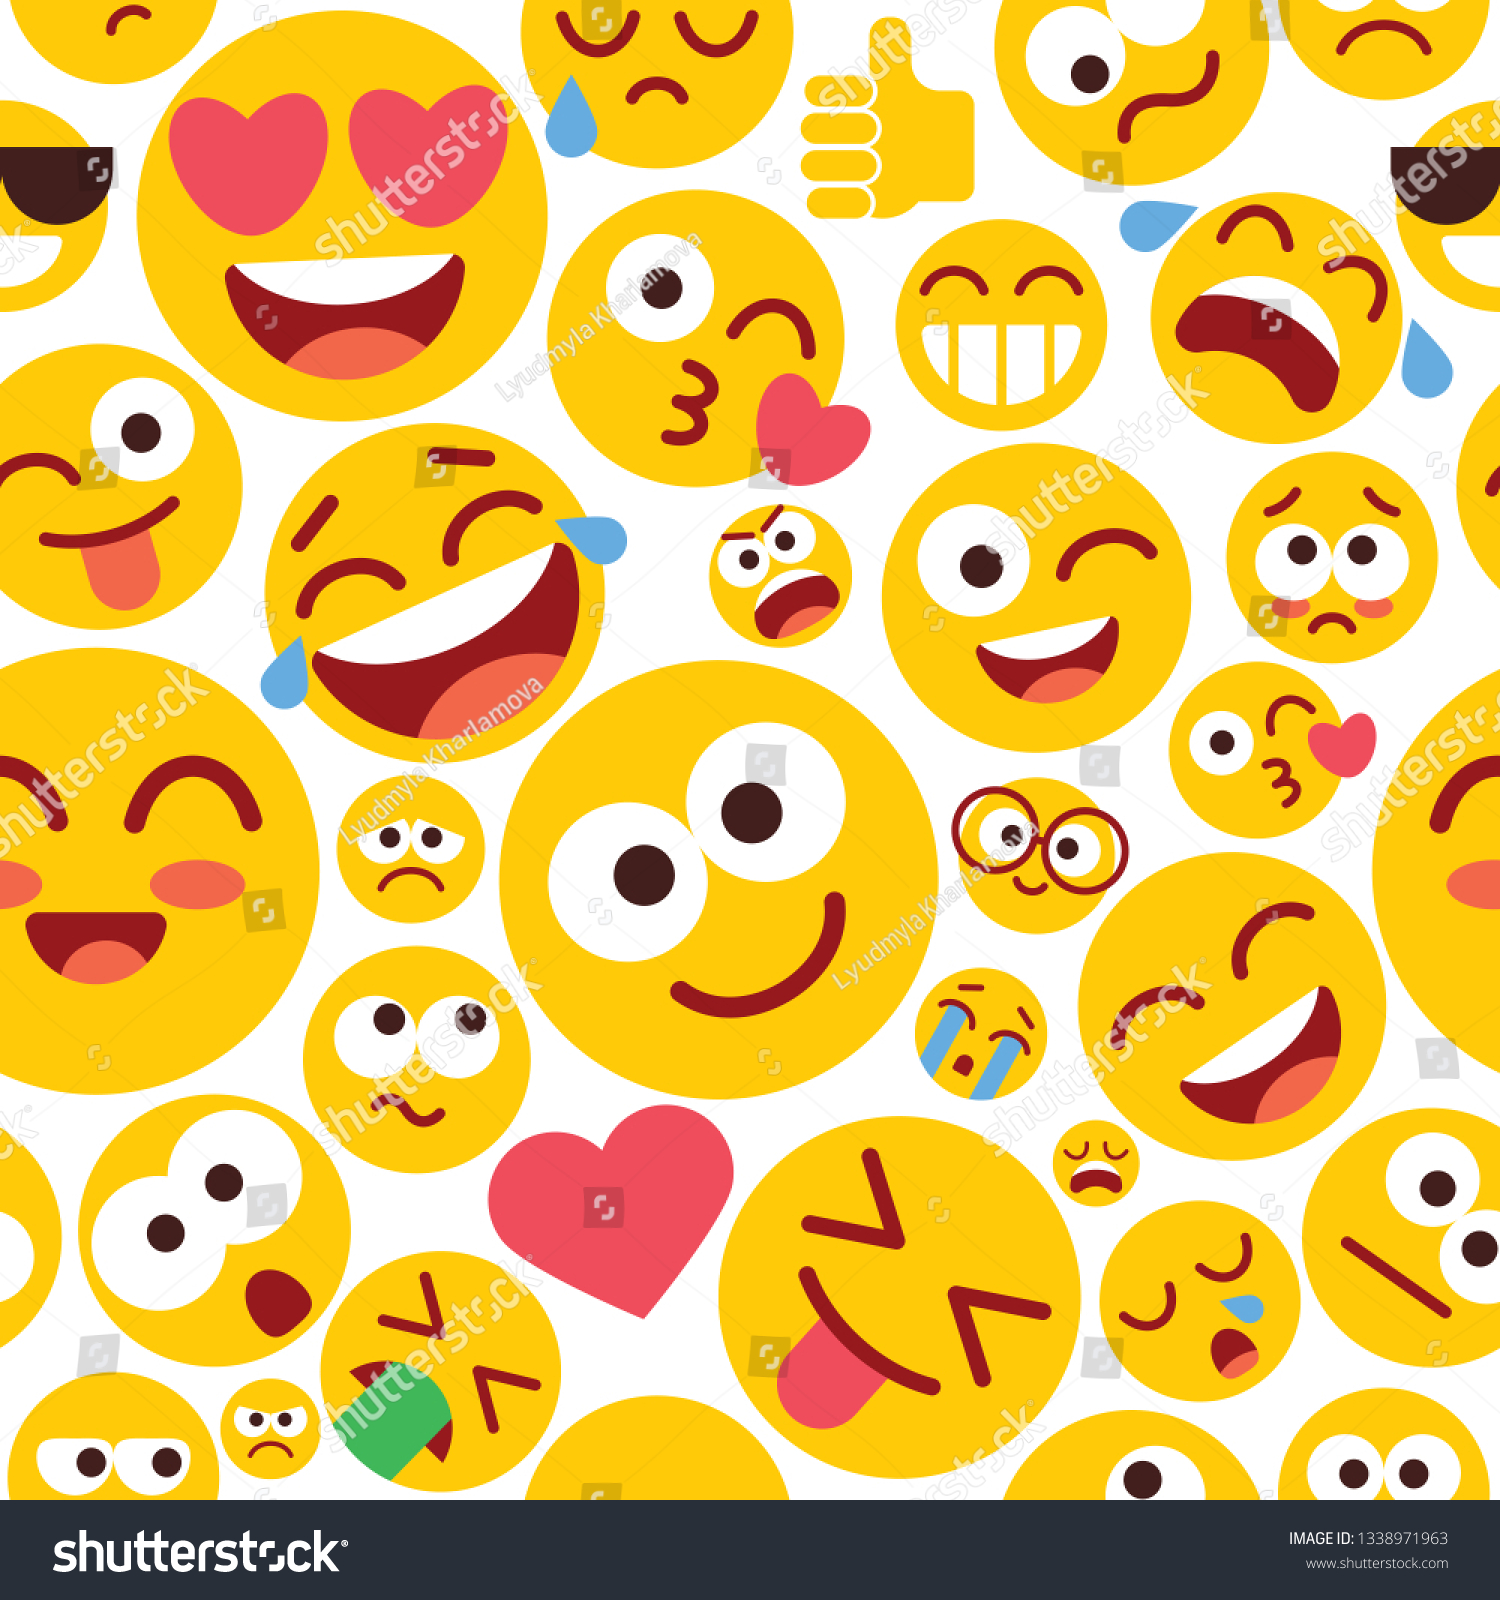 Emoji background